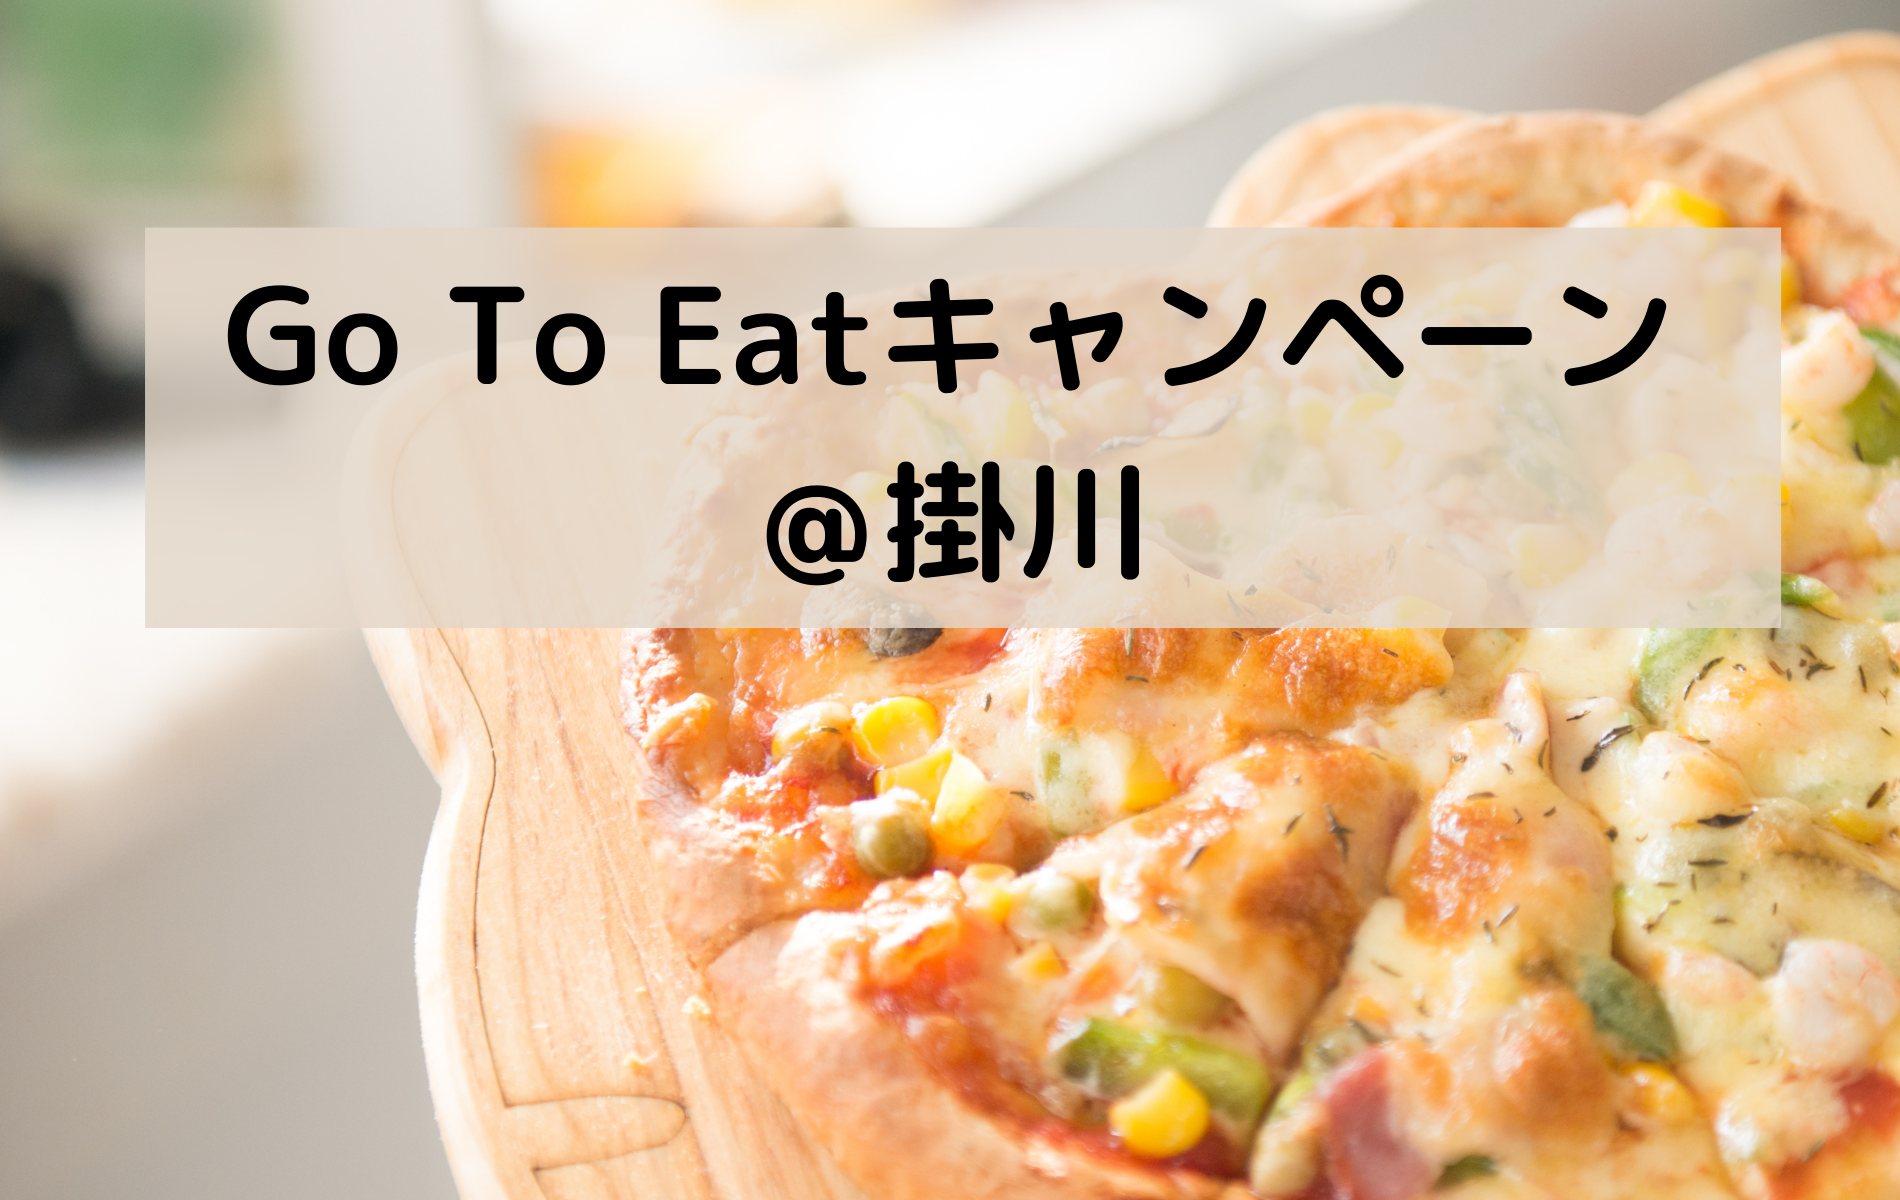 Go to eat掛川